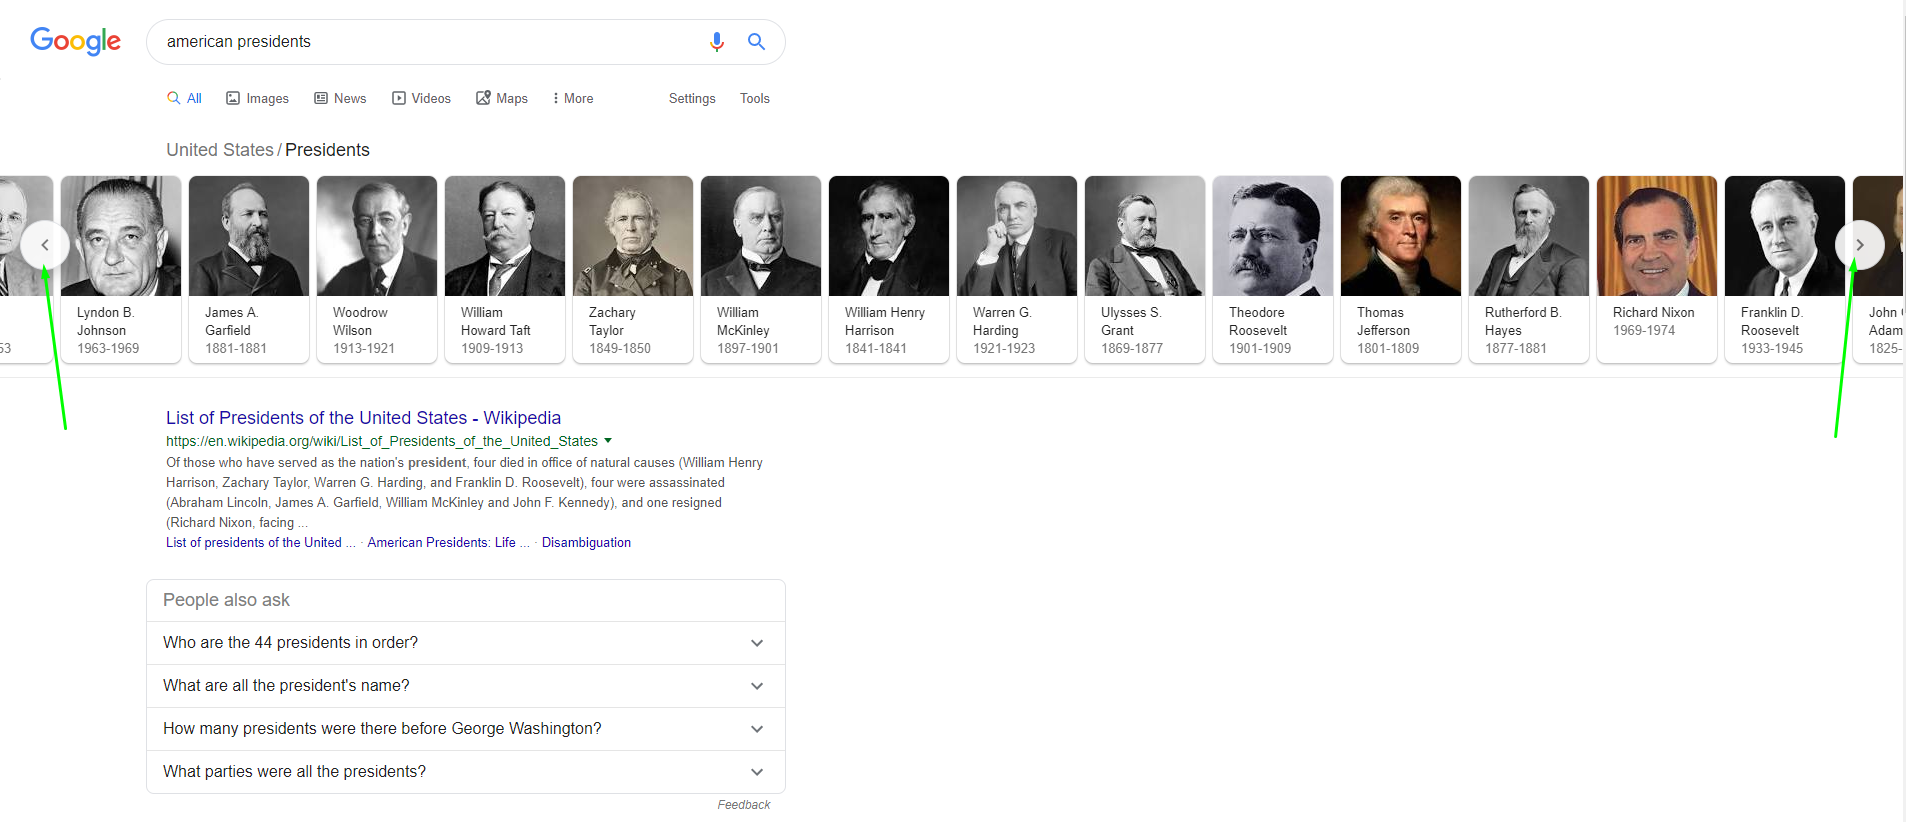 American presidents Google carousel